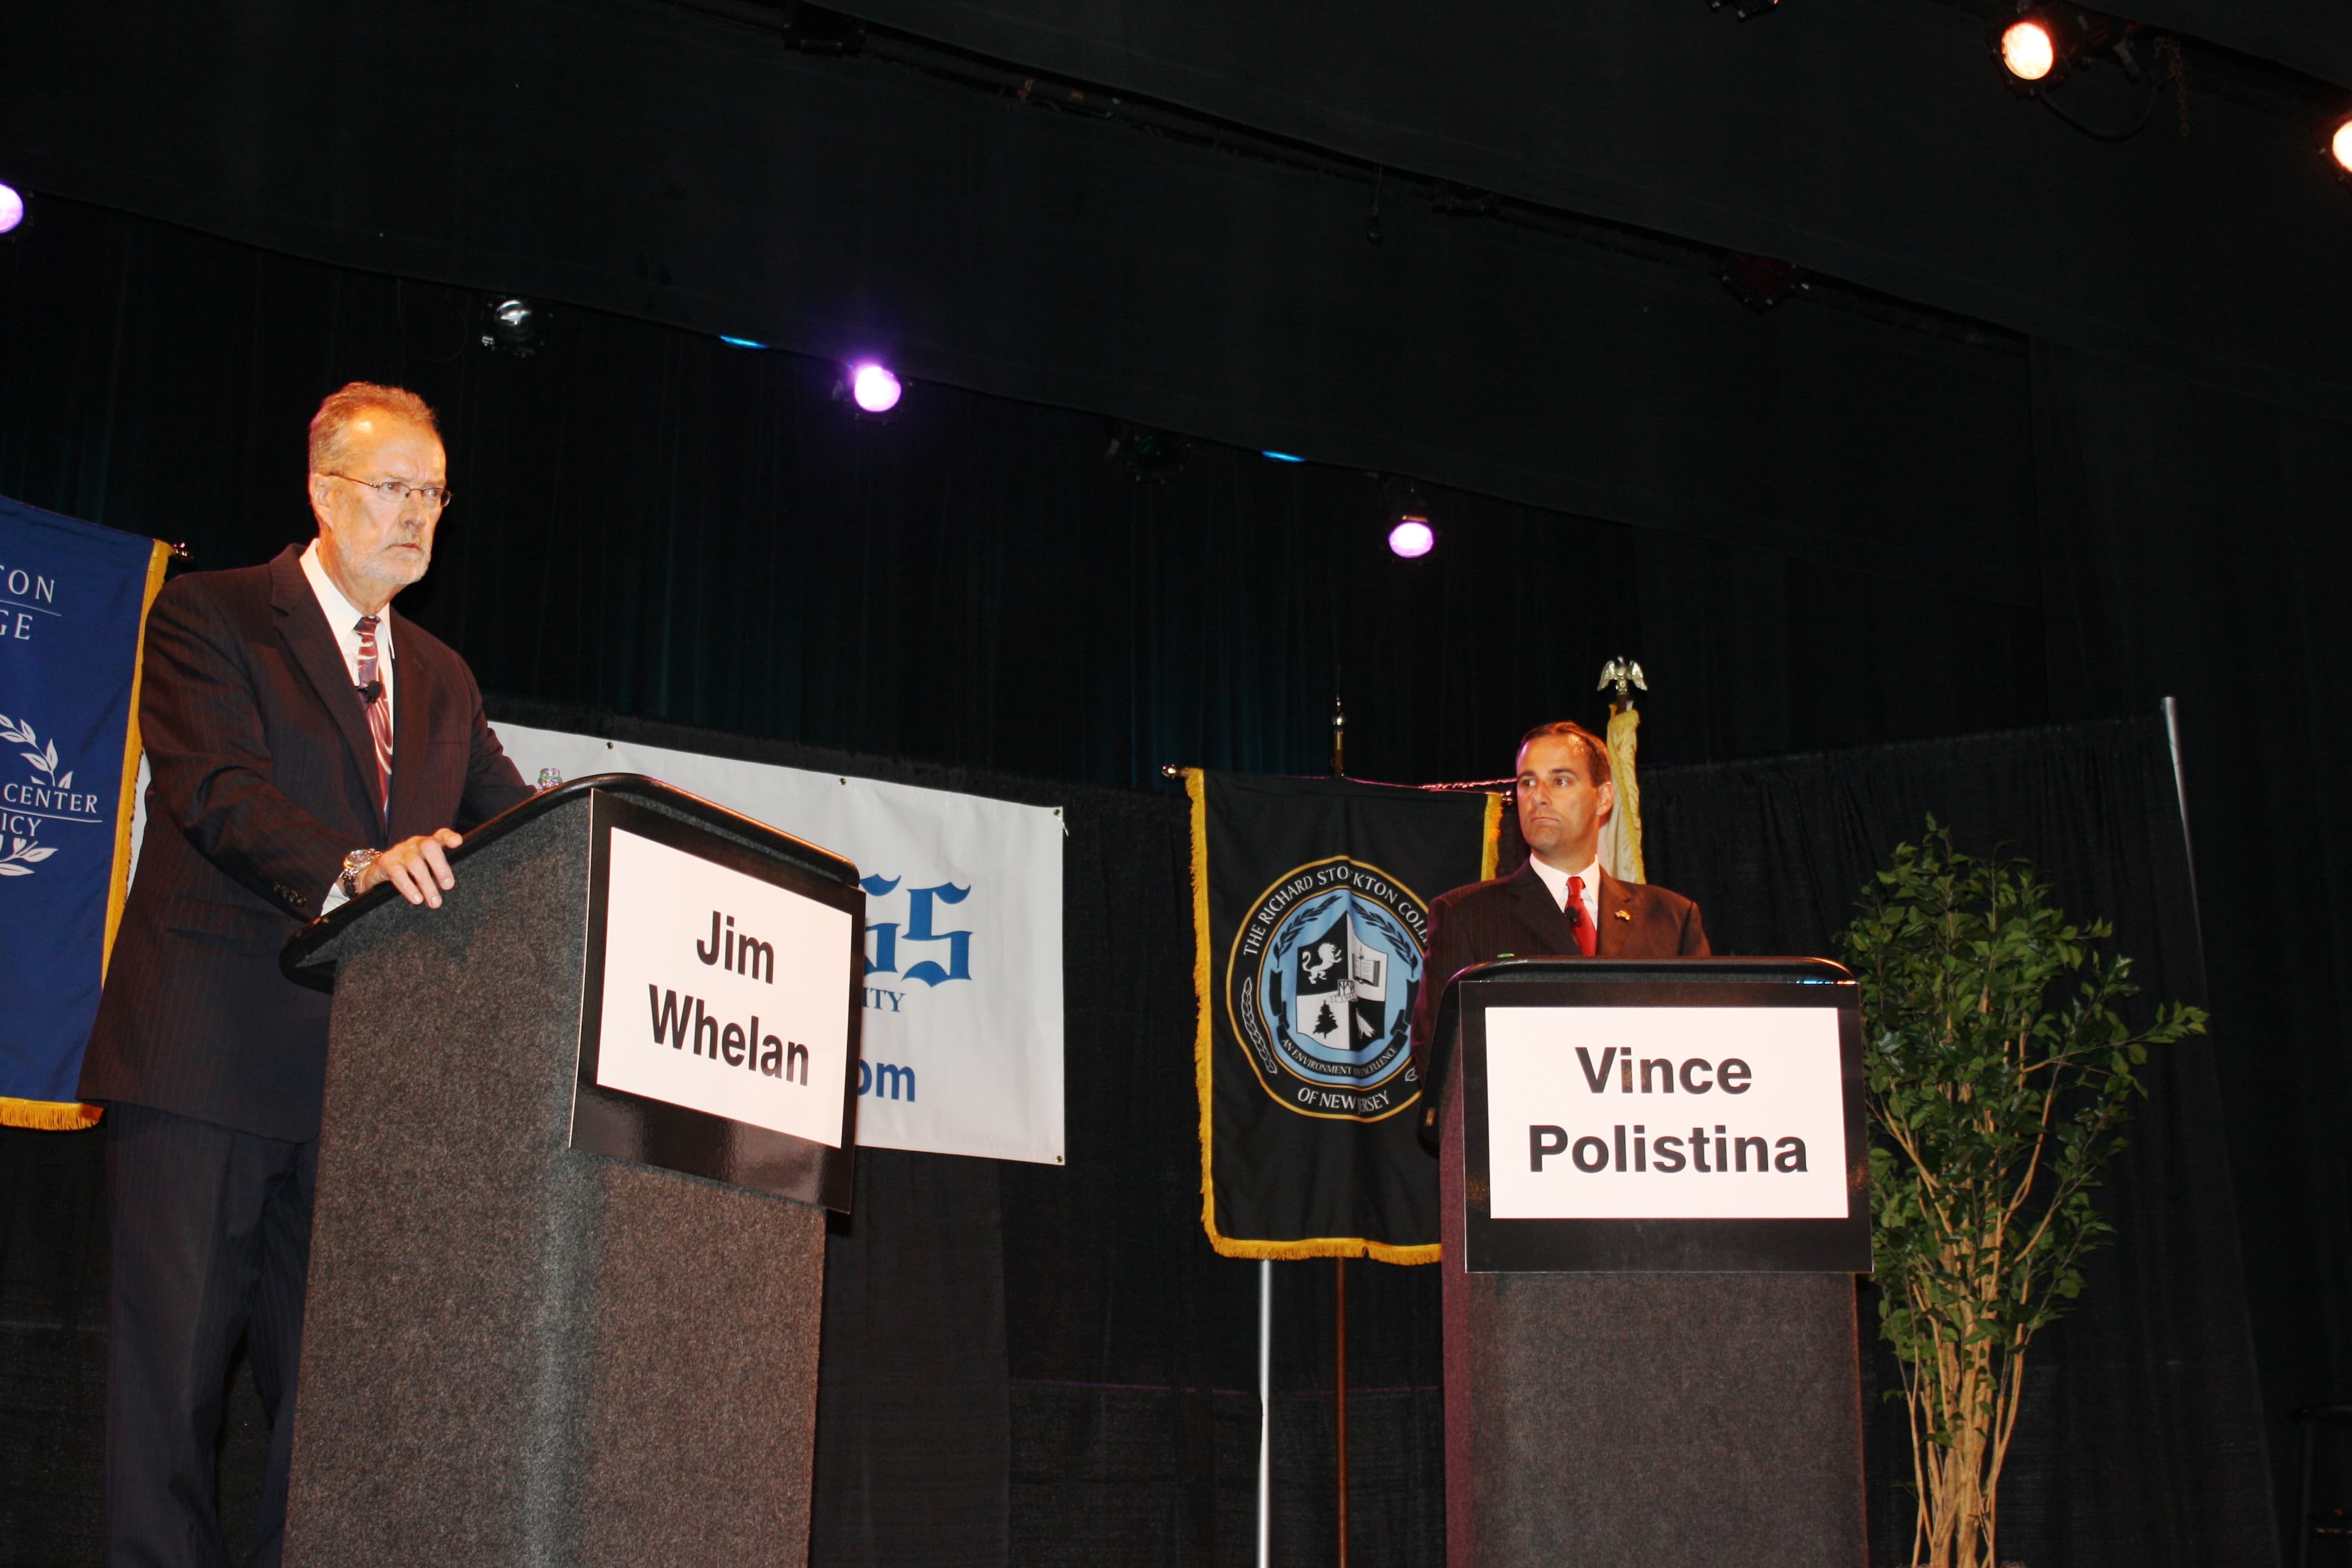 Senator Jim Whelan and Assemblyman Vince Polistina